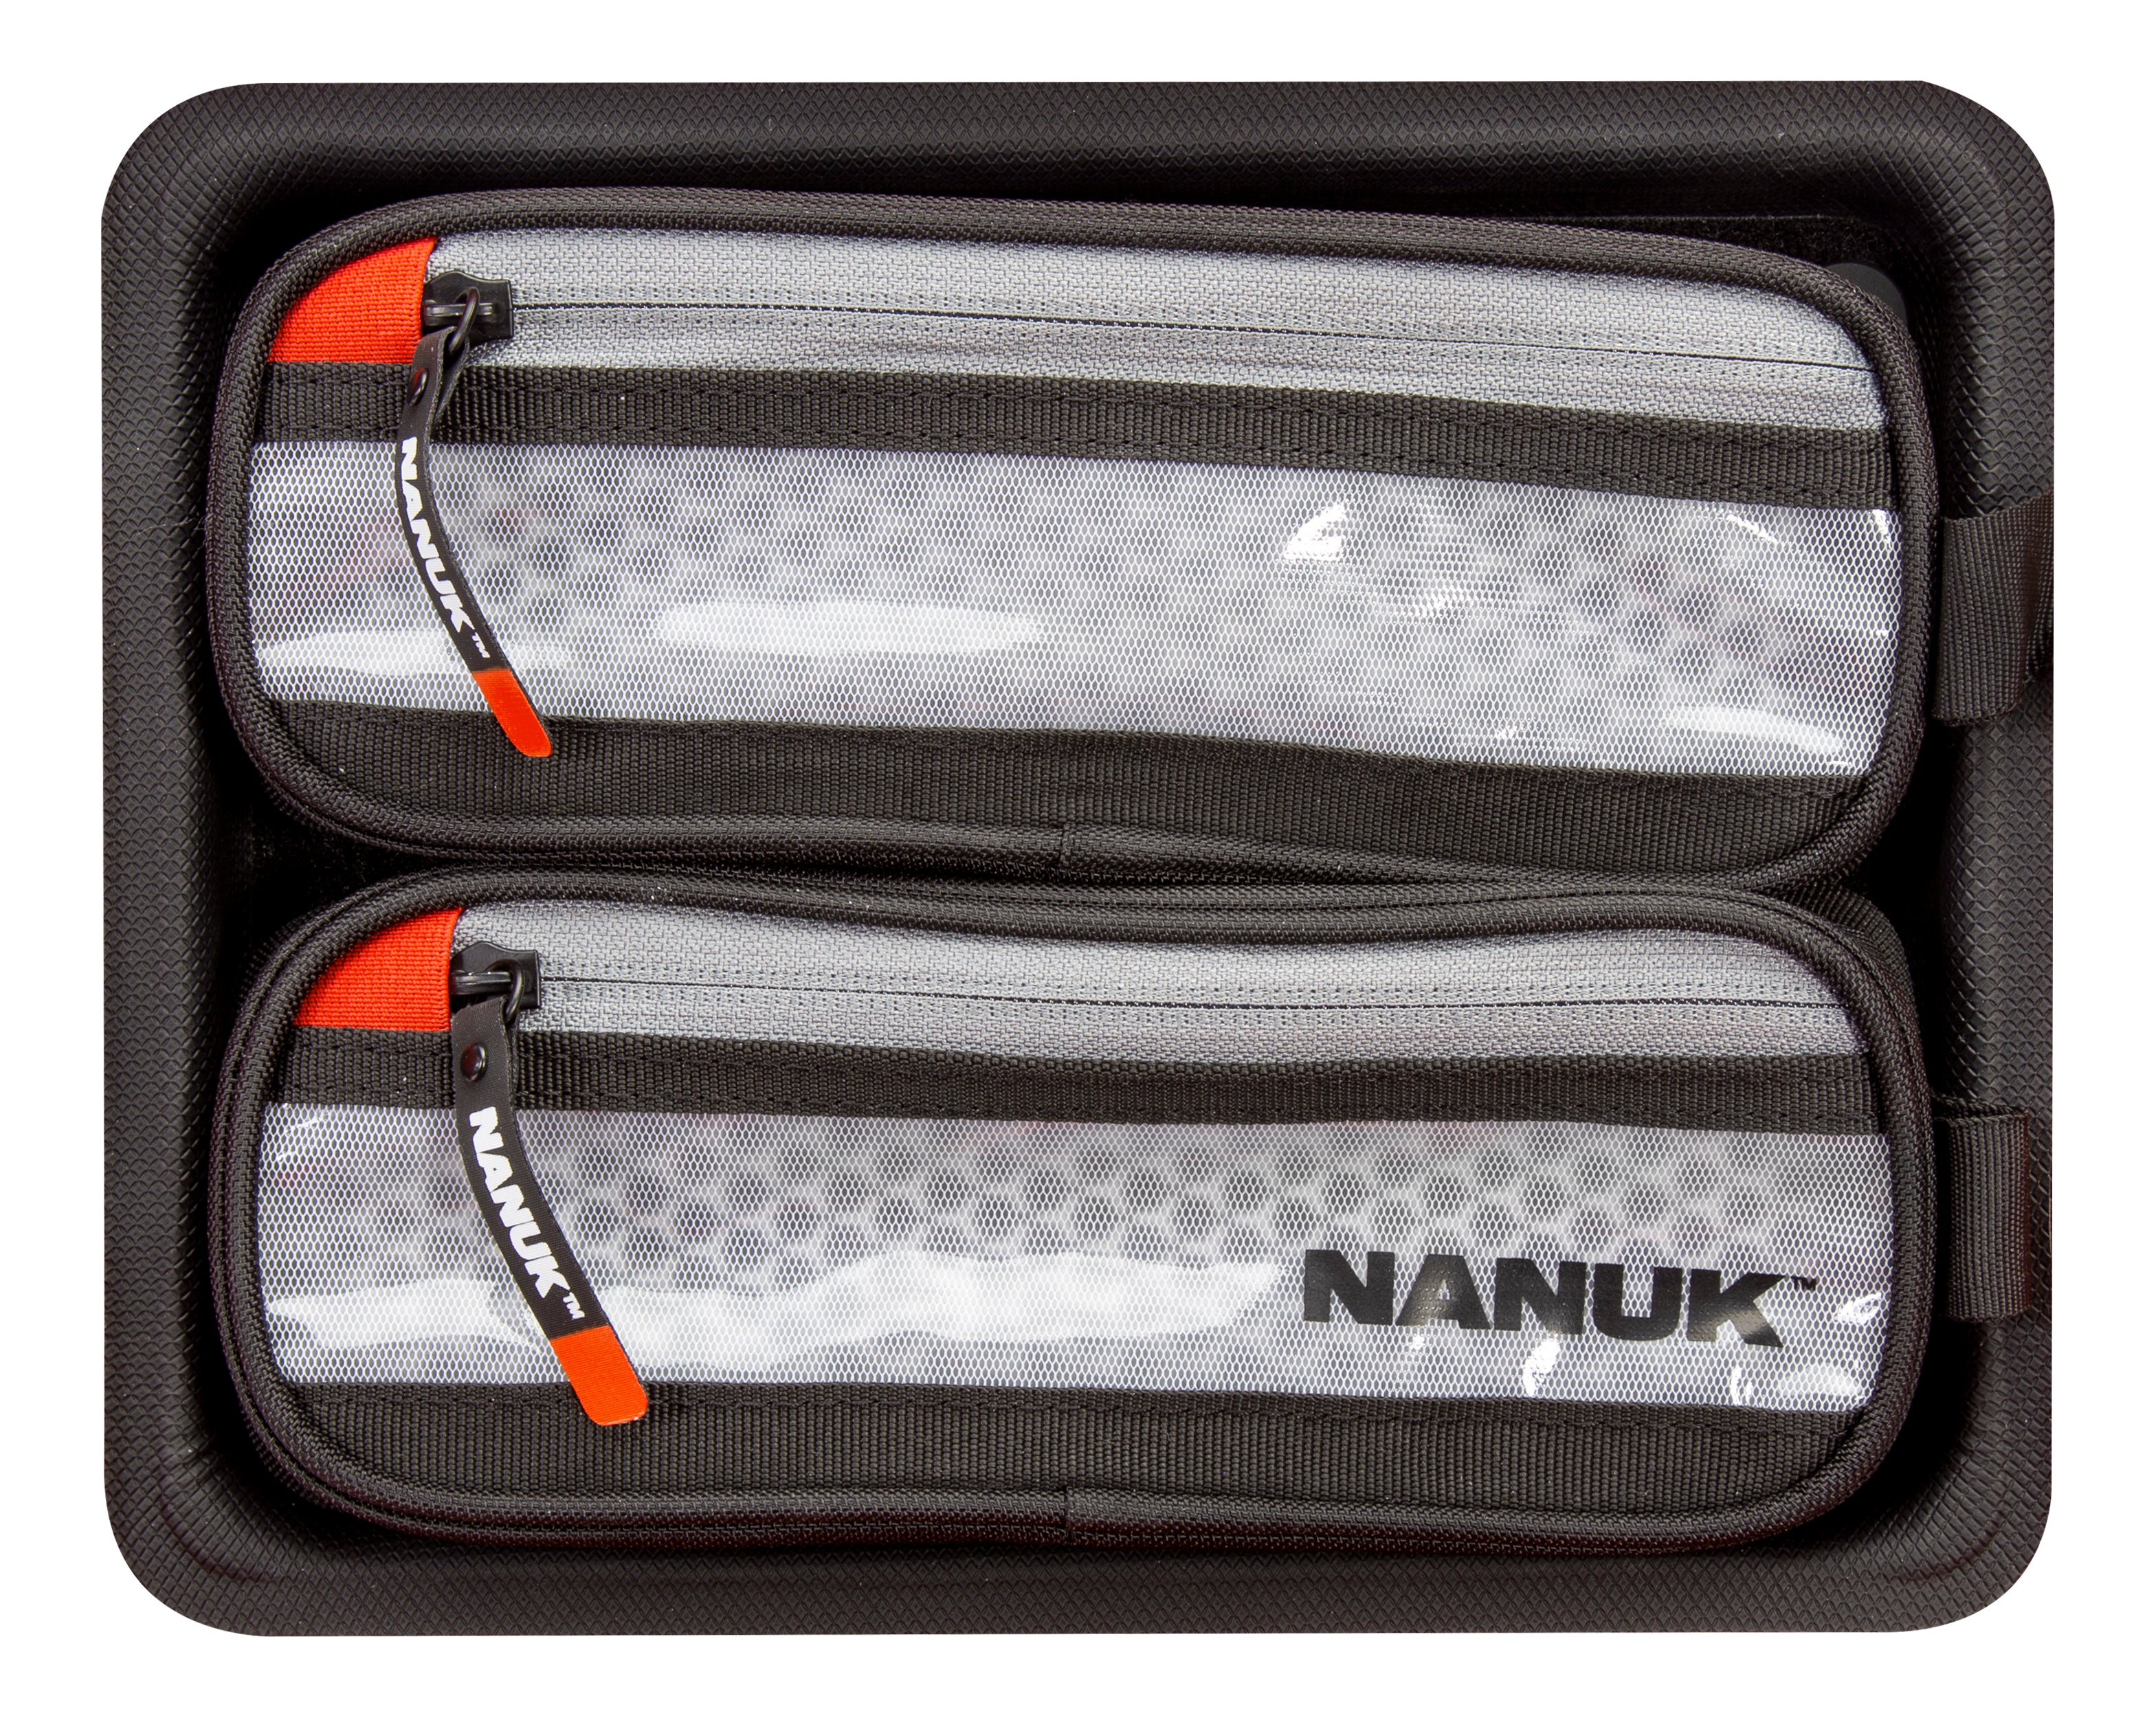 NANUK 990 LONG CASE FOR ICE FISHING RODS, OLIVE